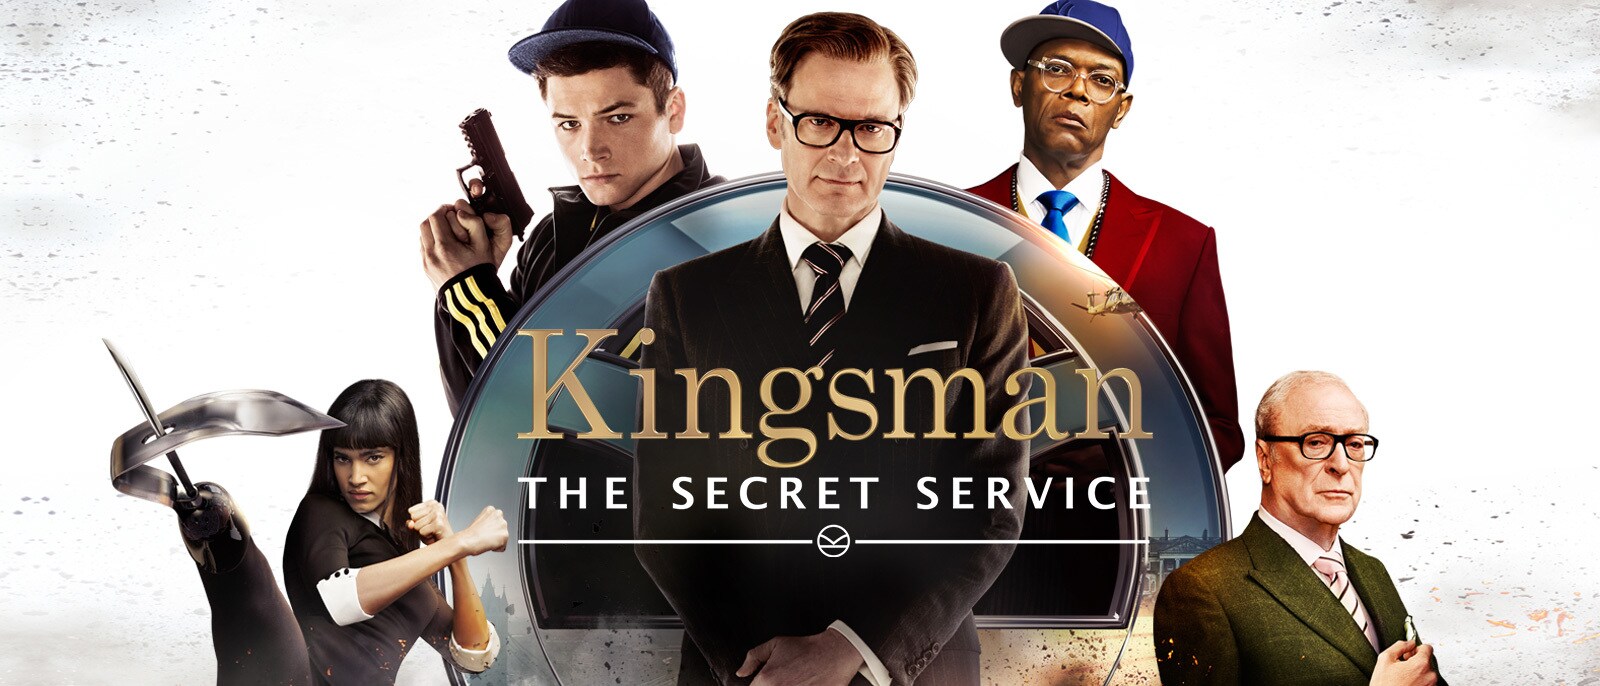 watch kingsman 2 free online 123movies